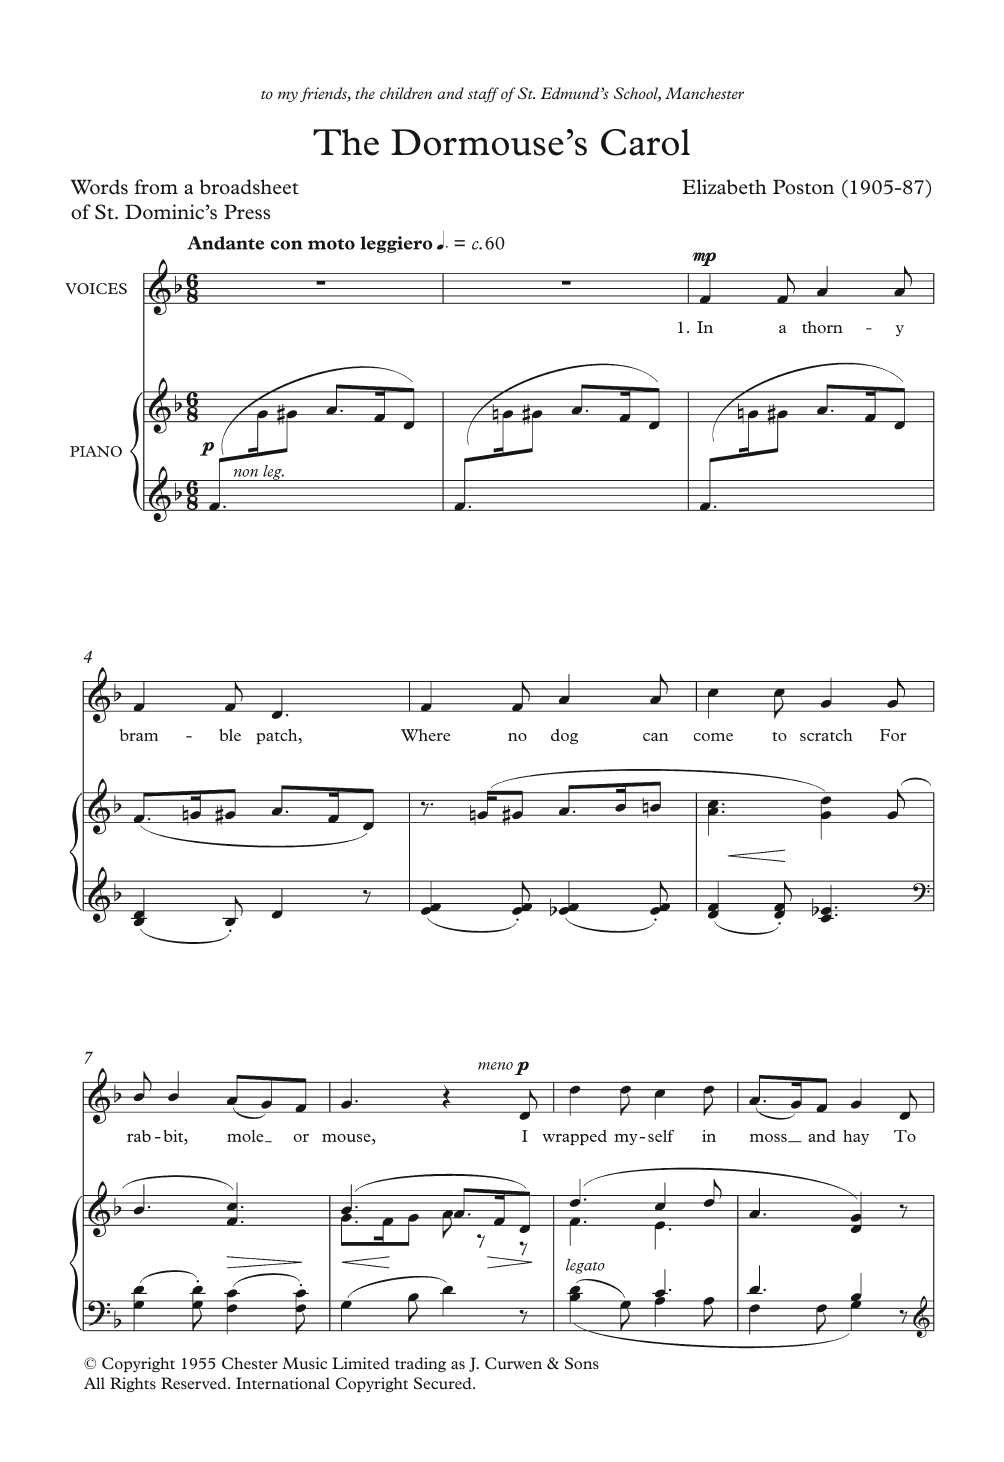 Elizabeth Poston The Dormouse's Carol Sheet Music Notes & Chords for Unison Choral - Download or Print PDF